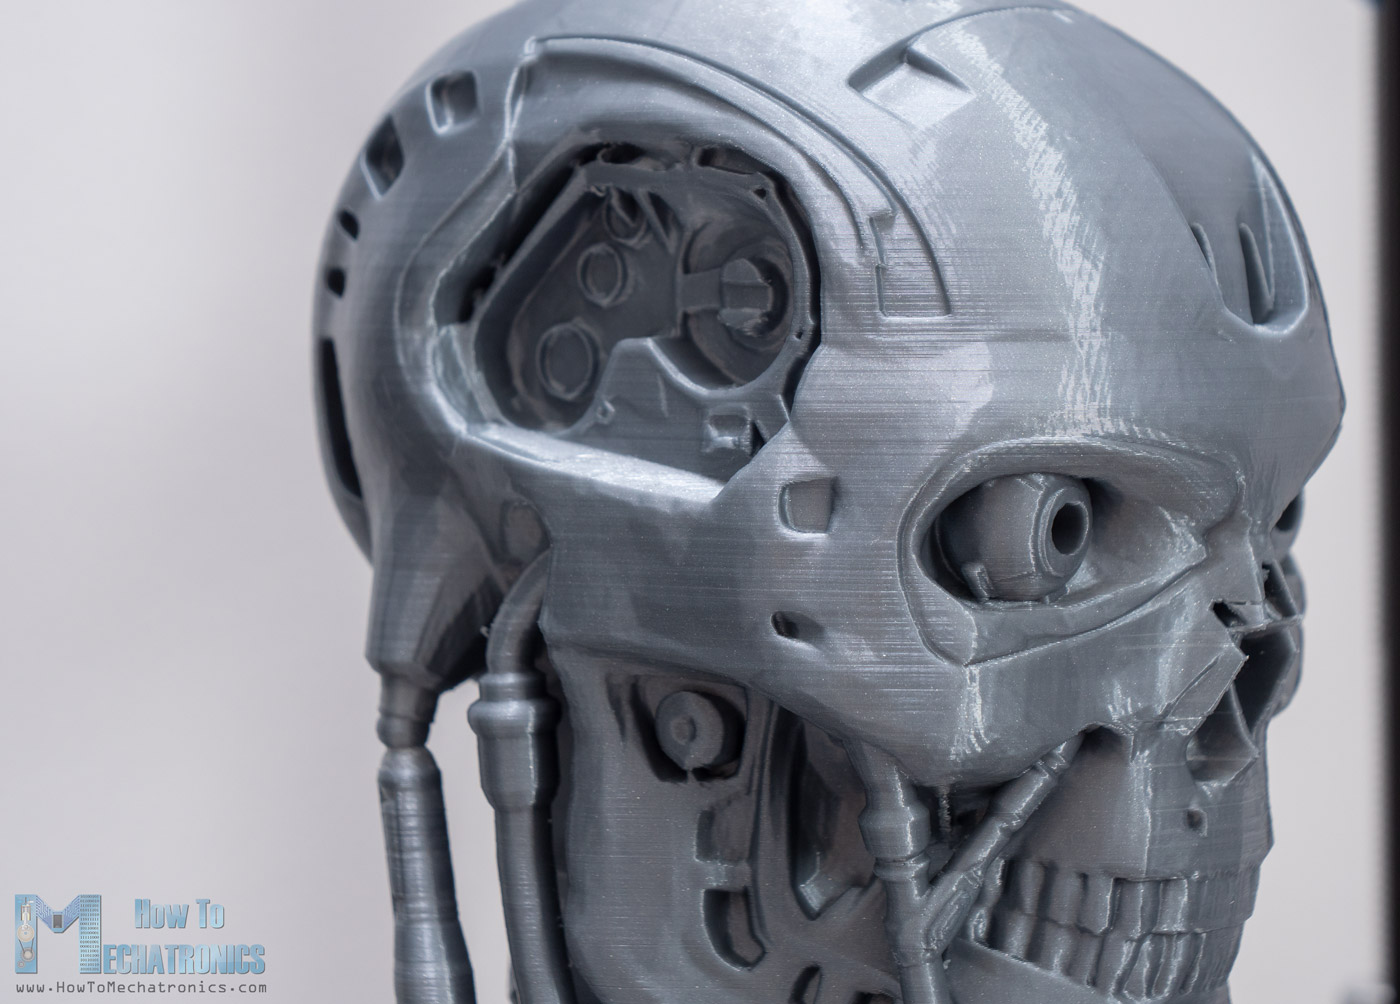 3D Printed Terminator Model - Detailed High Quality Print